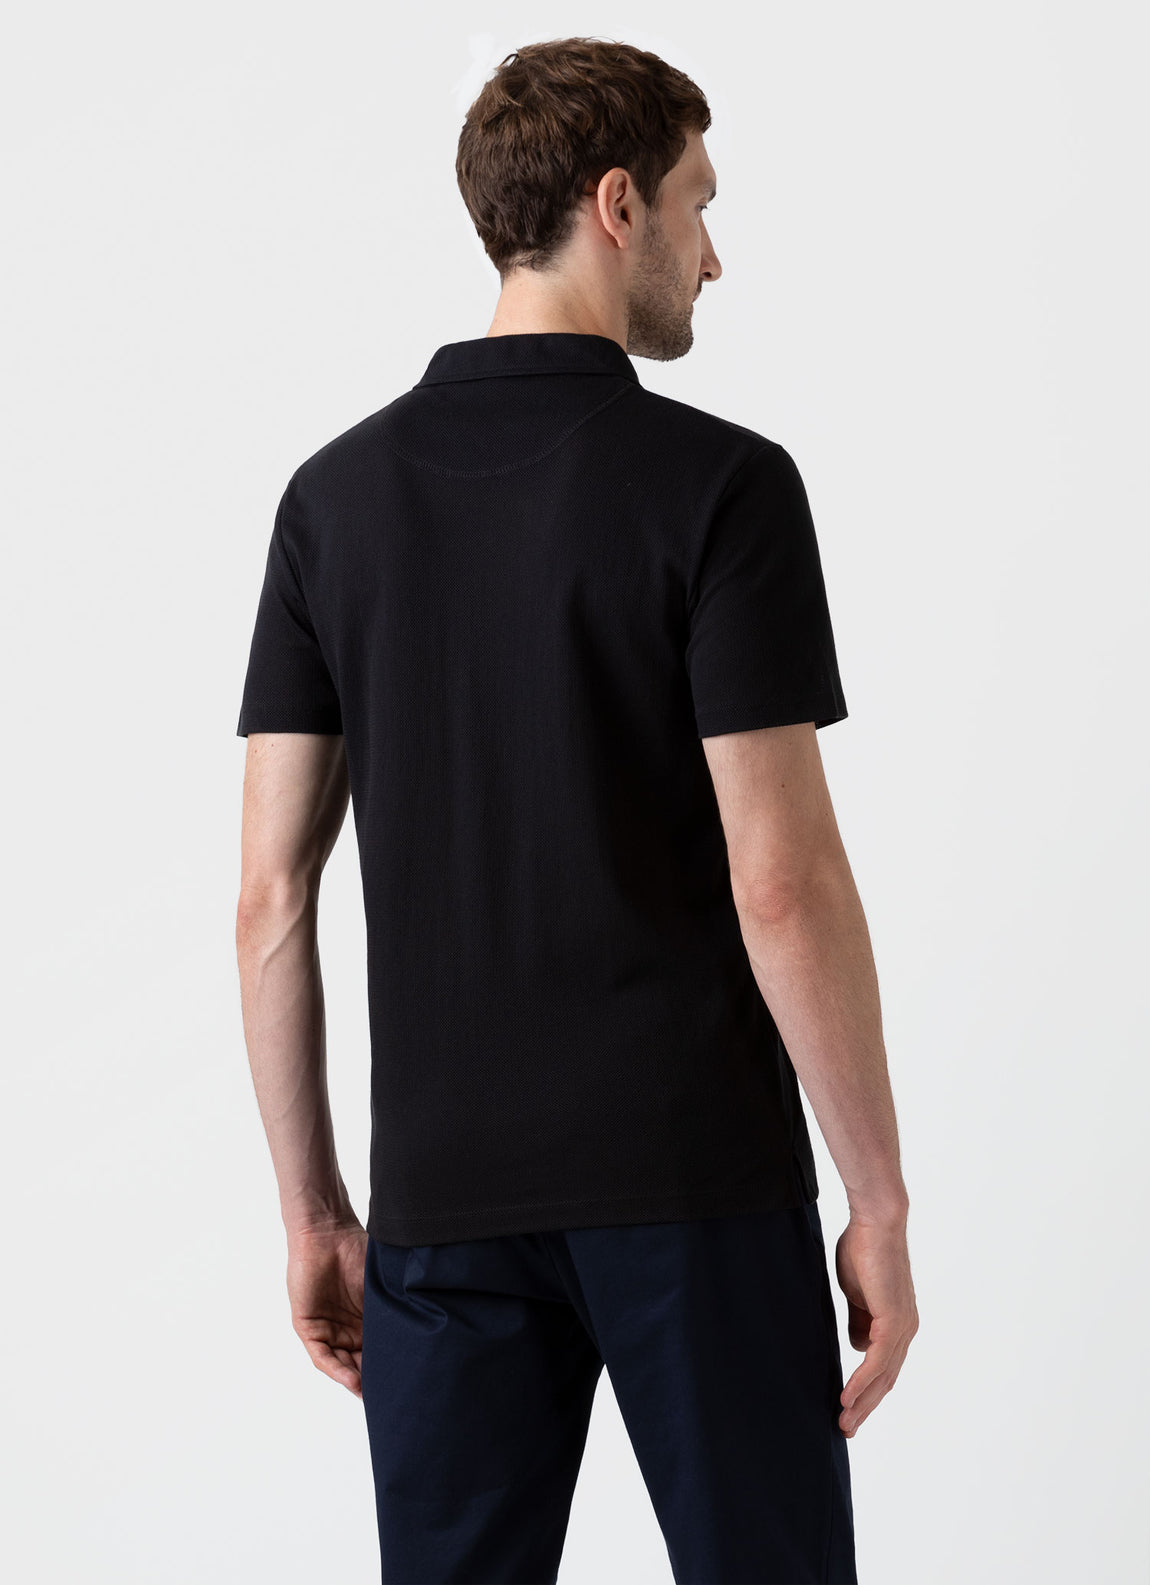 Men's Riviera Polo Shirt in Black | Sunspel